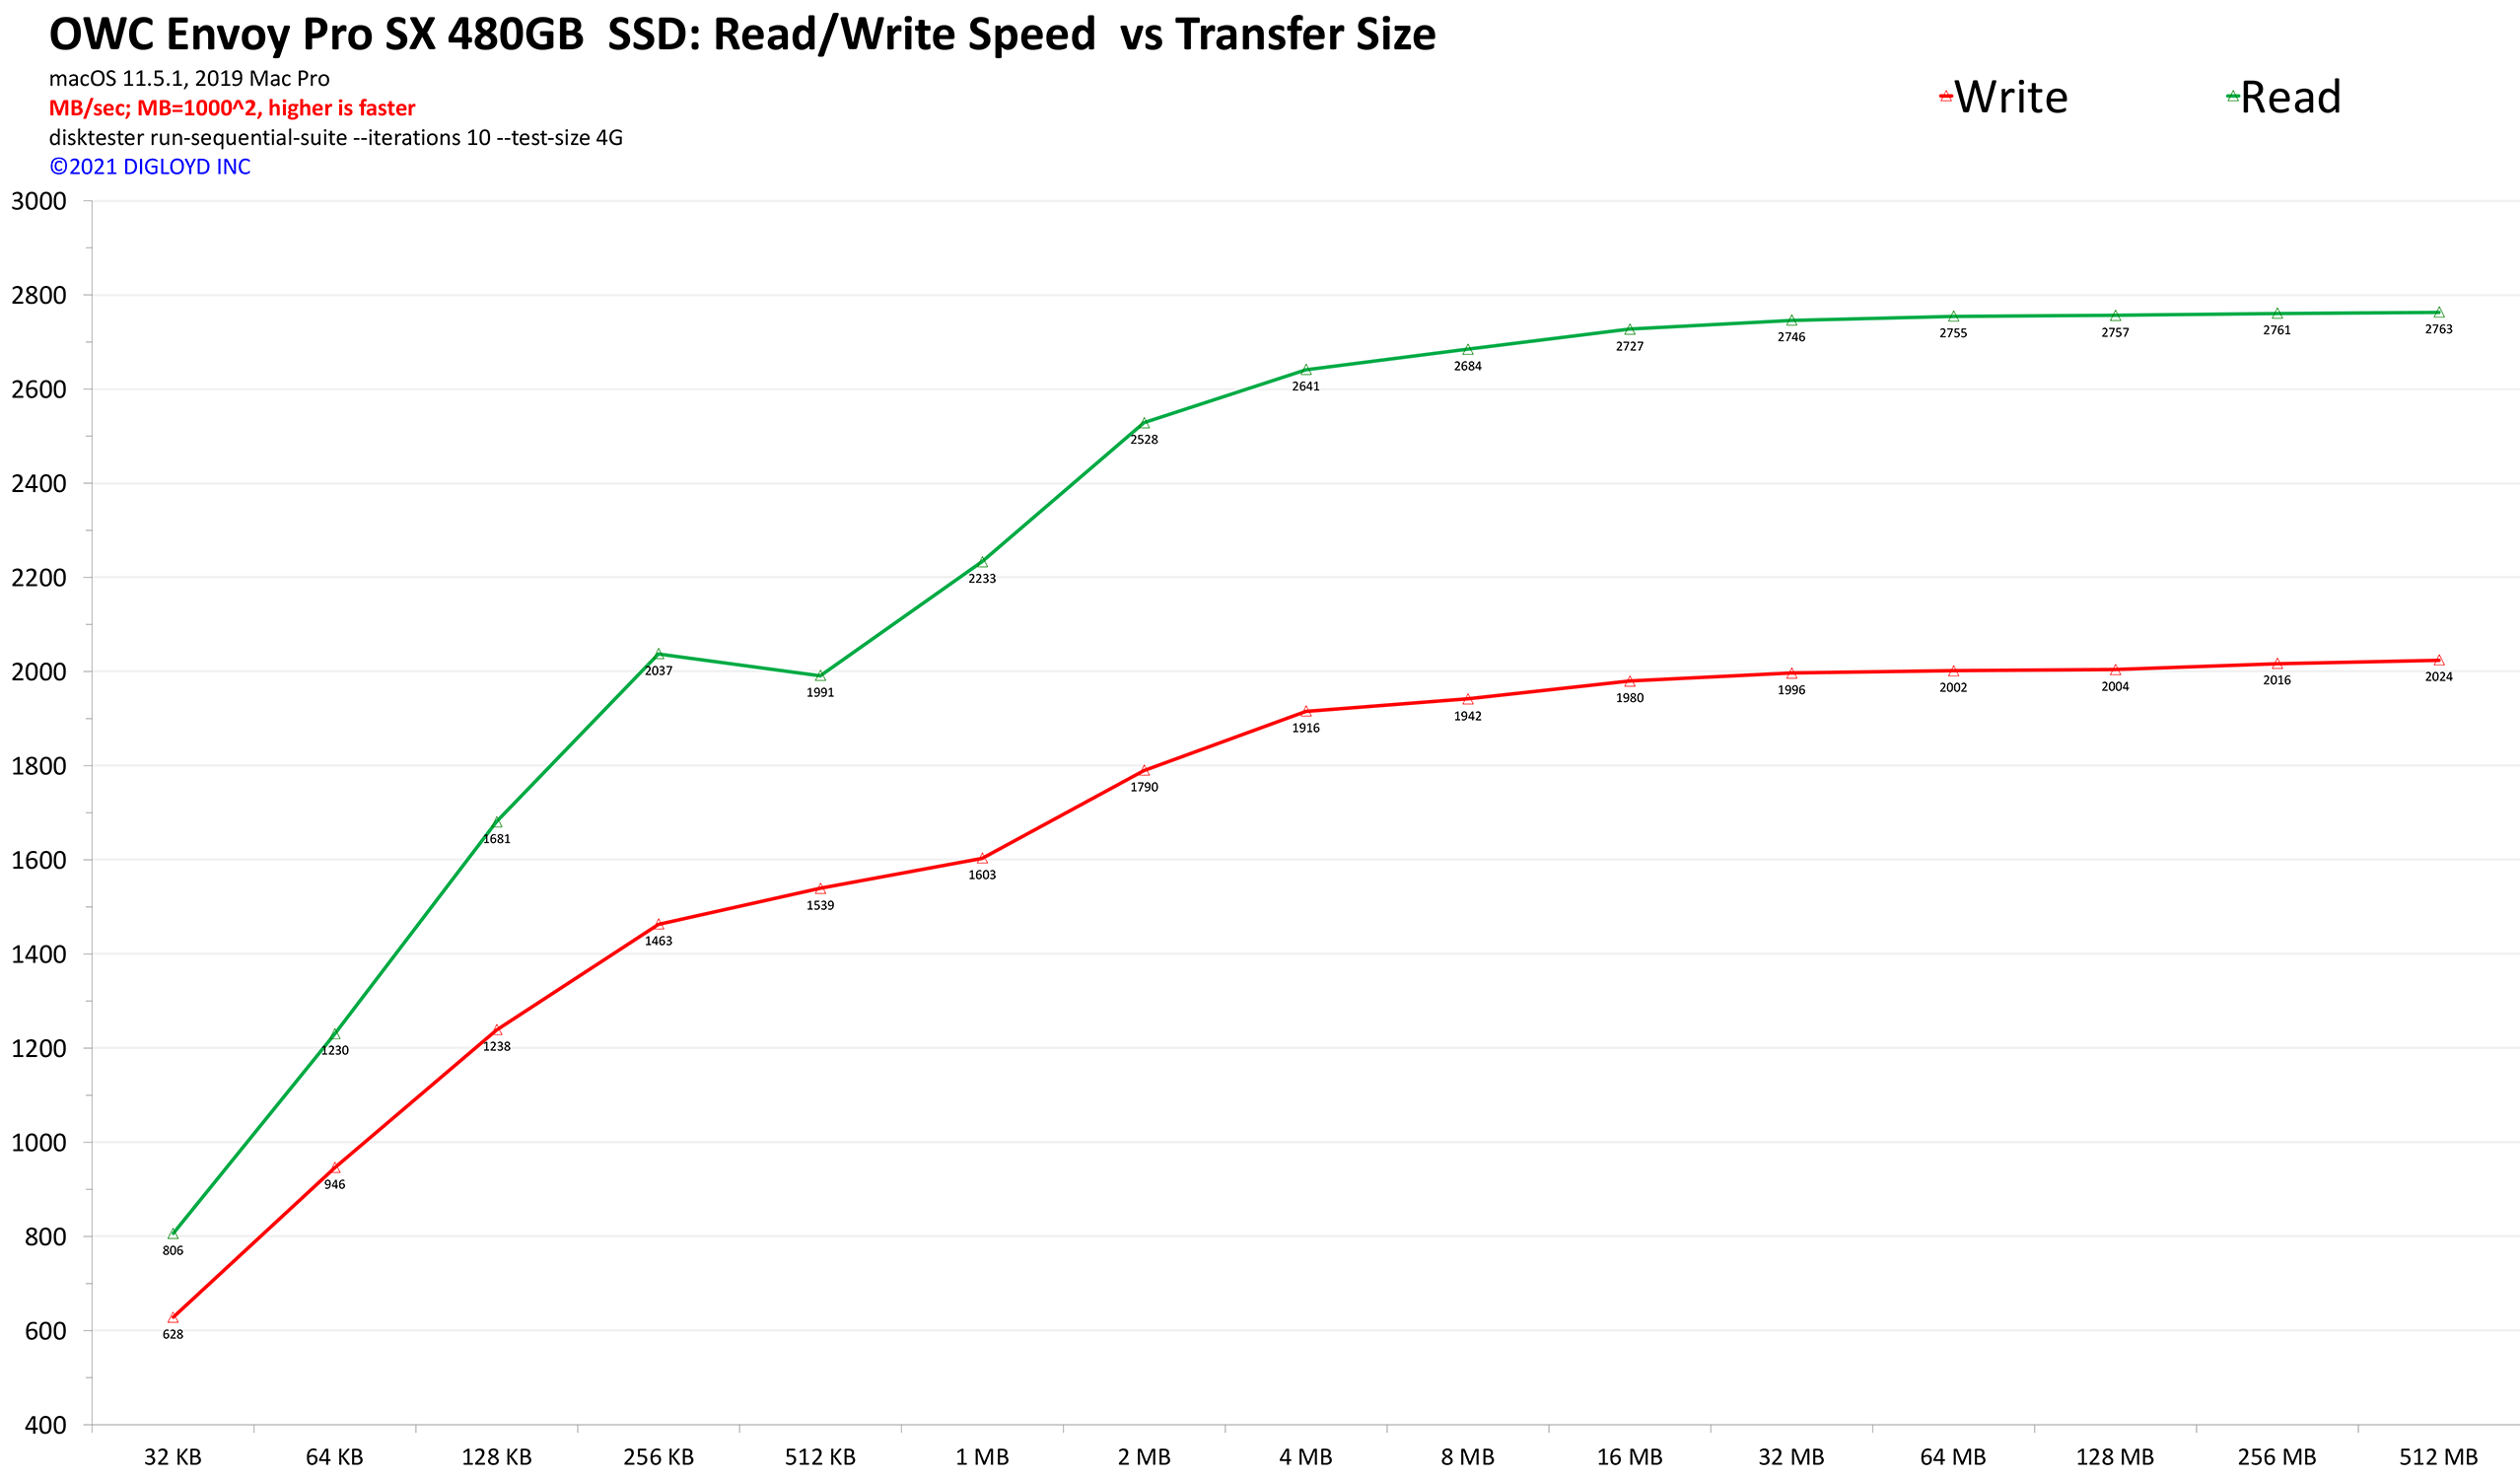 OWC Envoy Pro SX 480GB SSD: speed vs transfer size